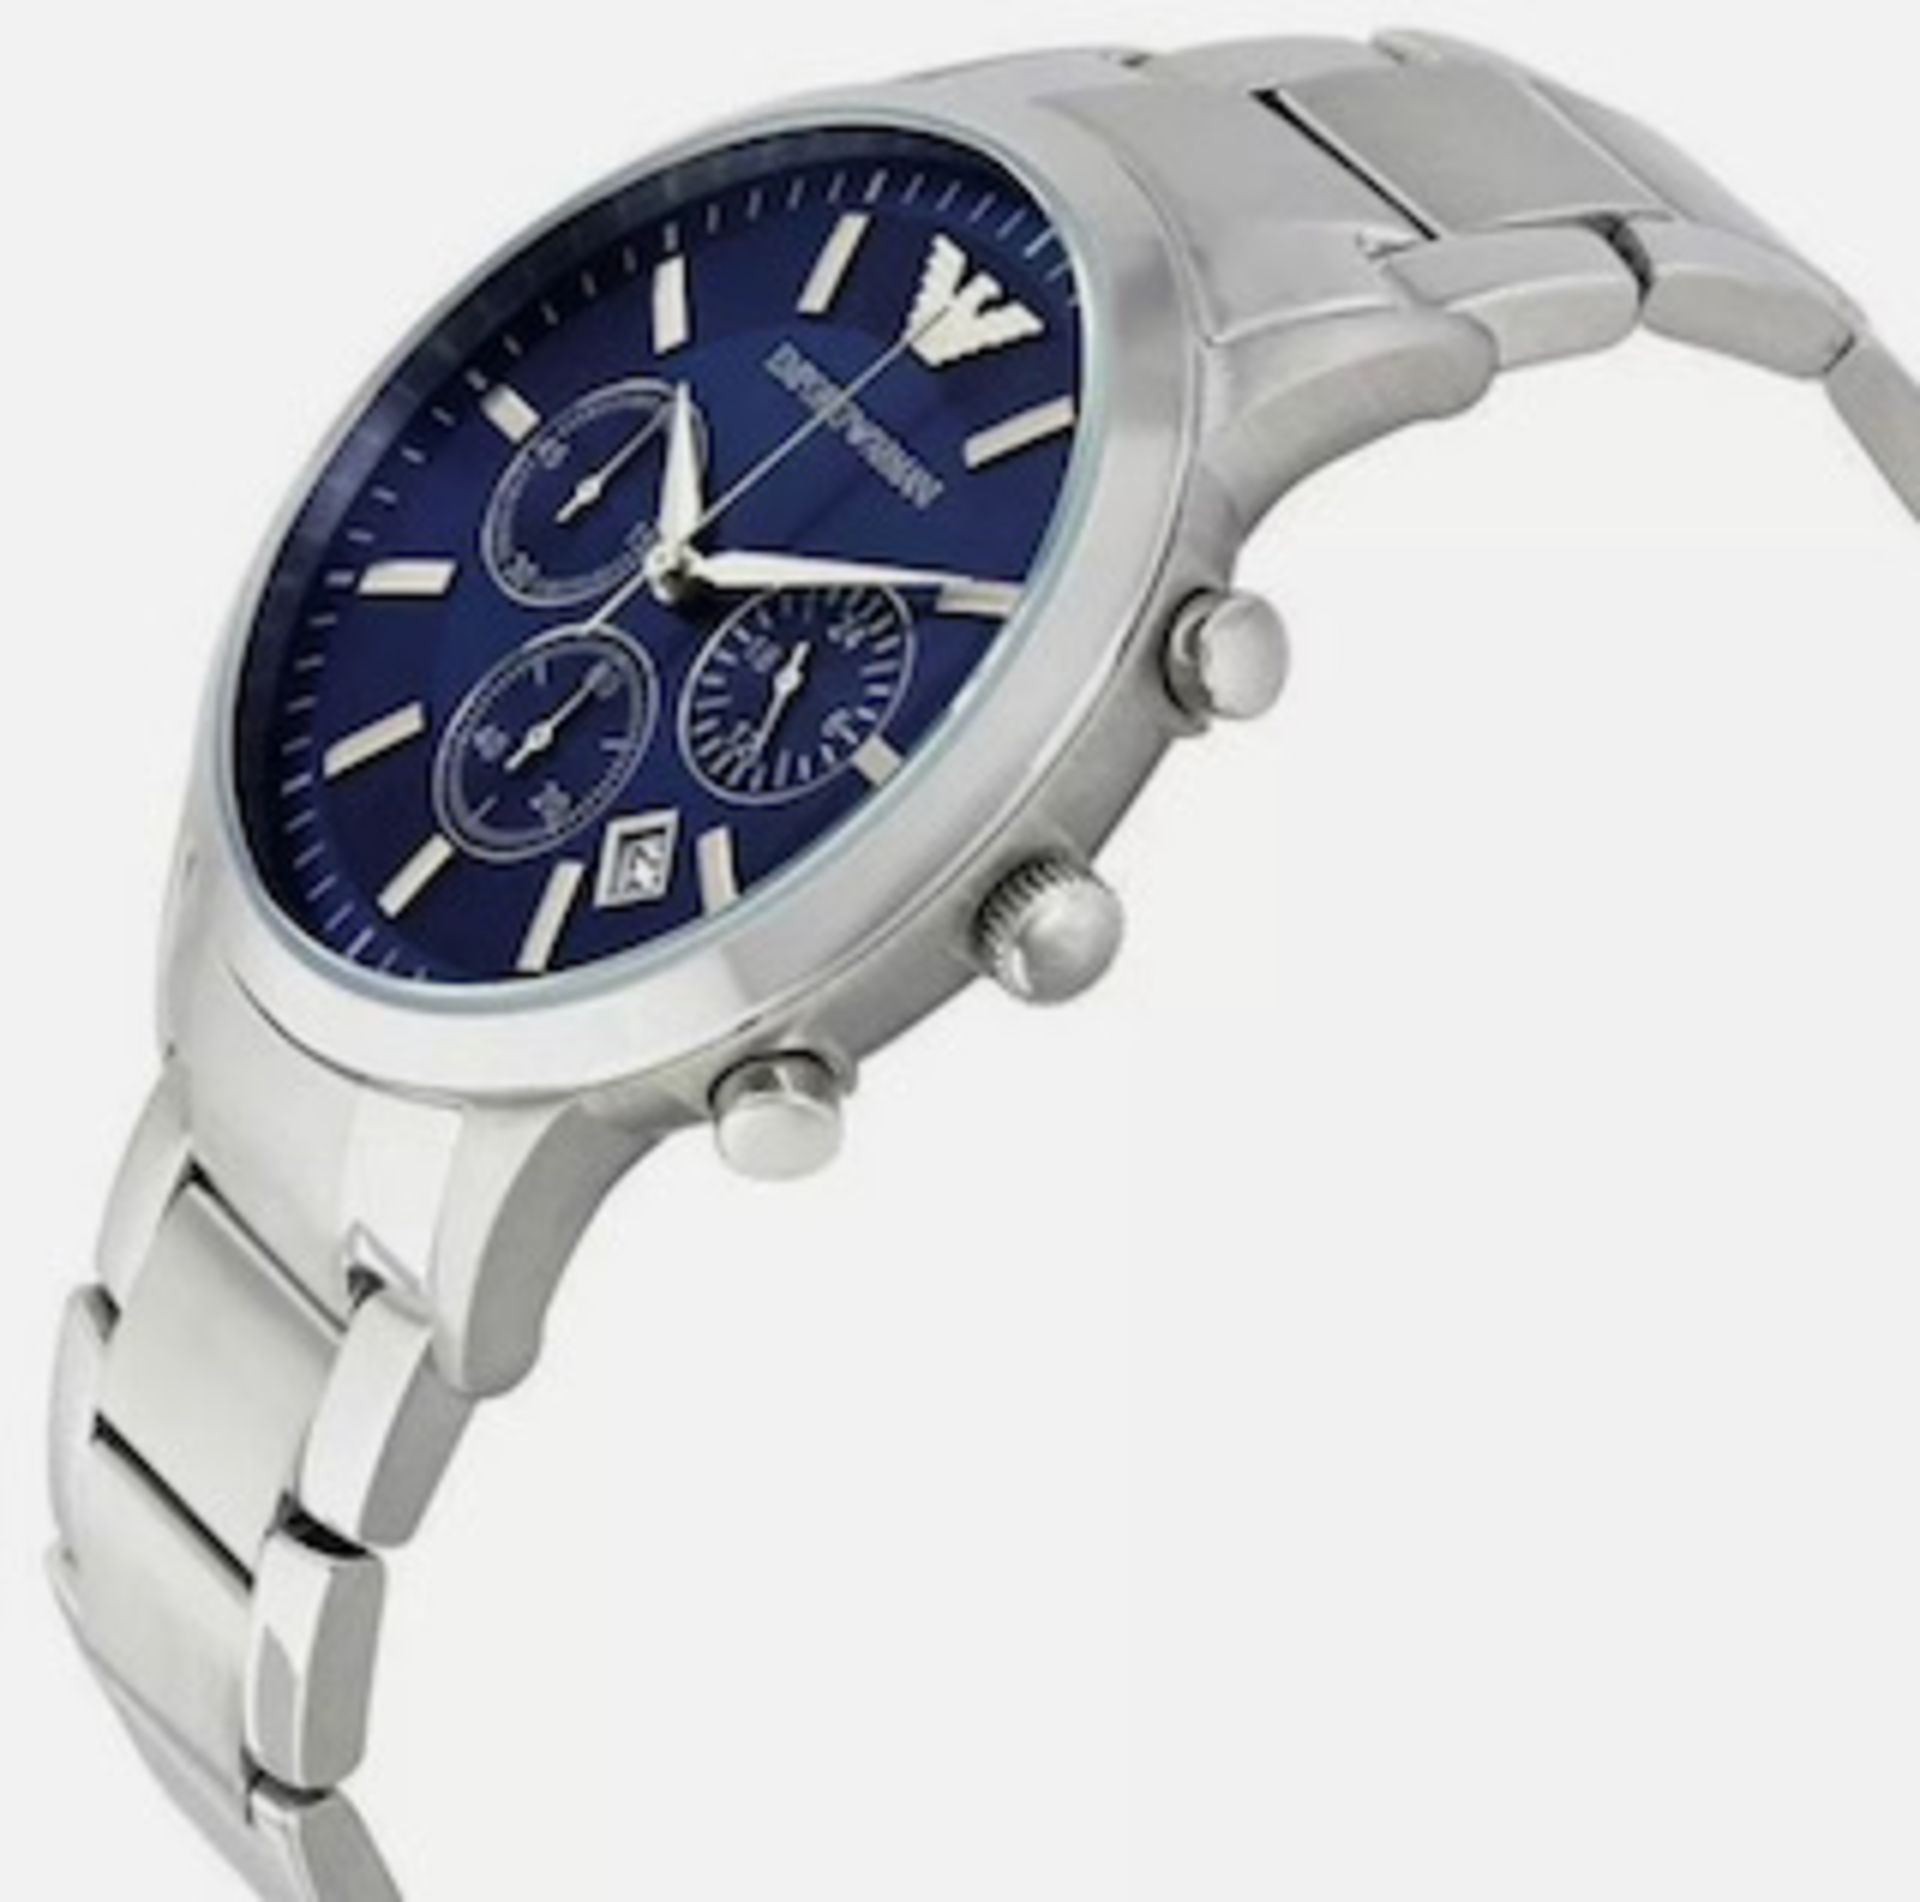 Emporio Armani AR2448 Men's Blue Dial Silver Bracelet Chronograph Watch - Image 4 of 7